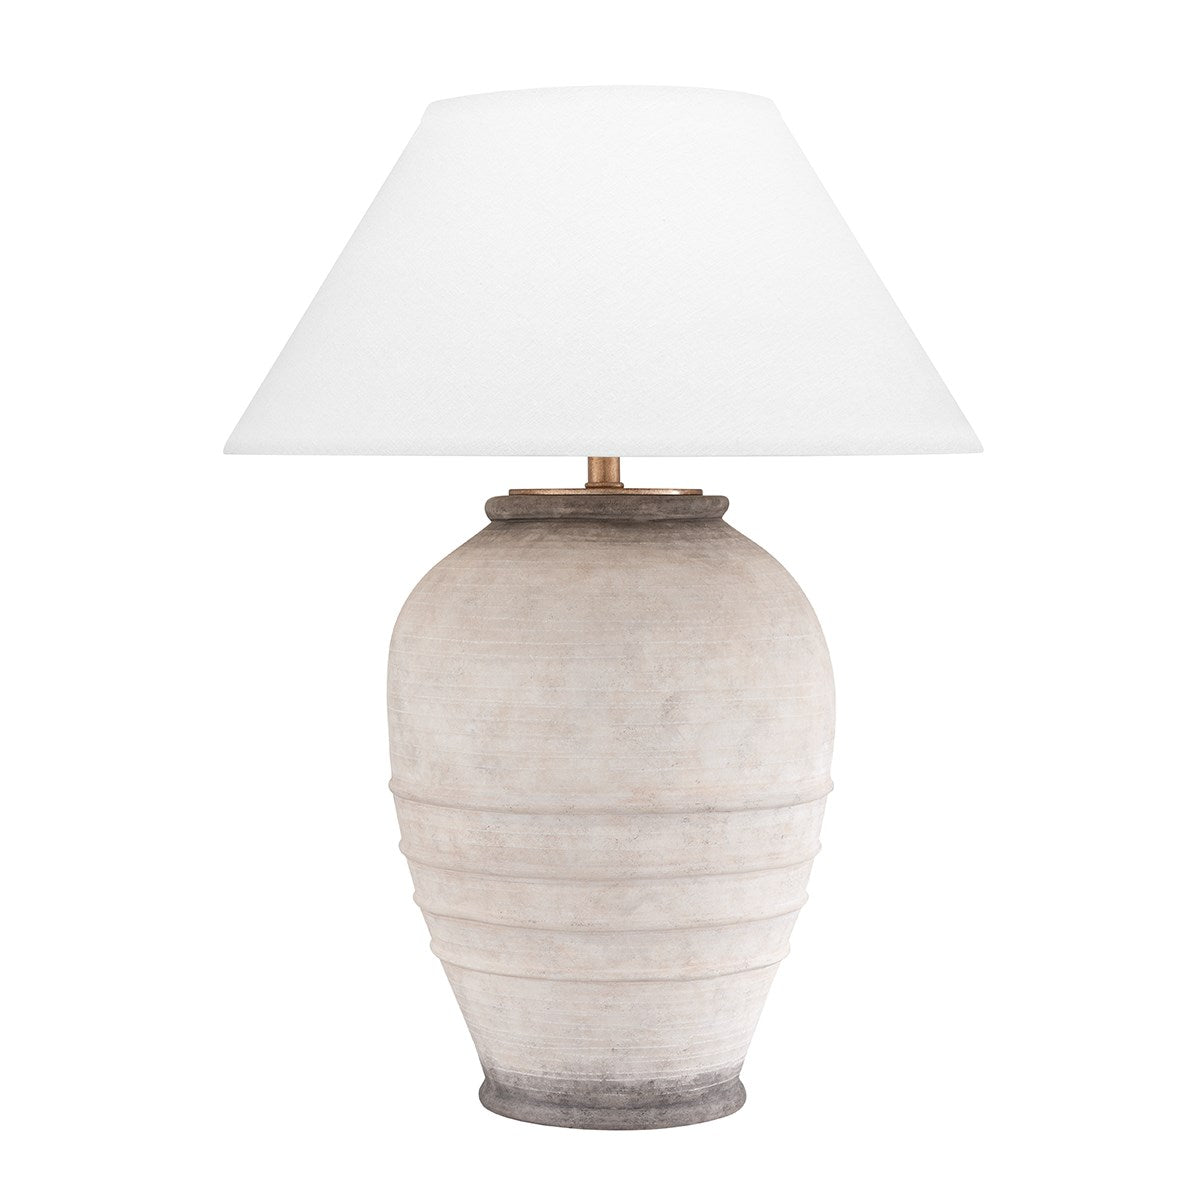 Decatur Table Lamp